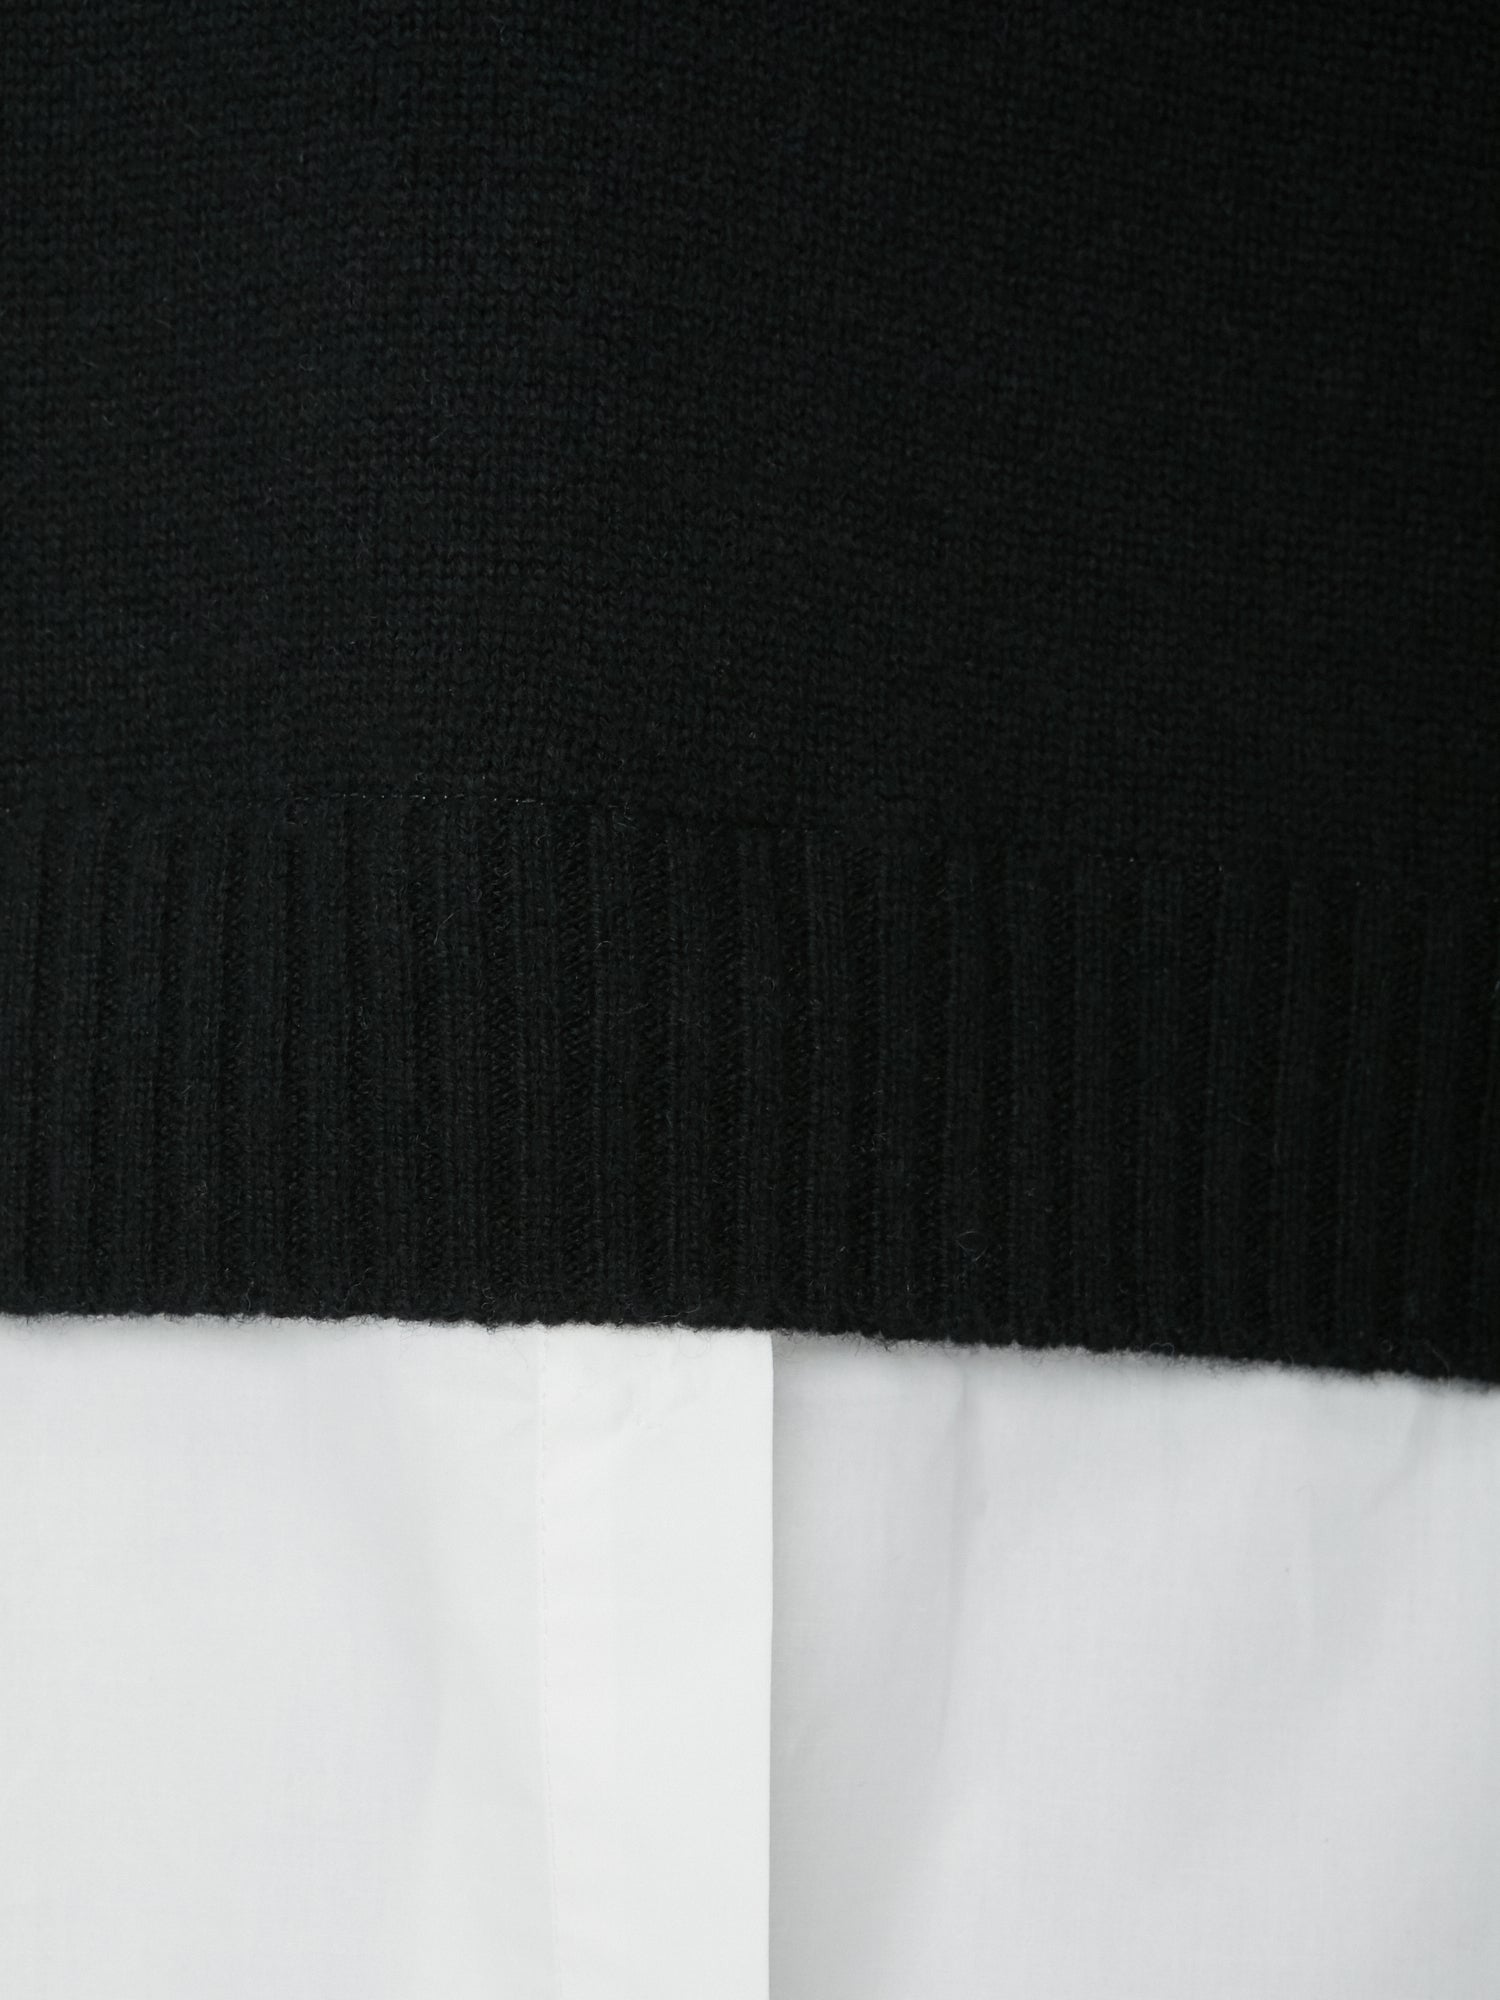 Eton black layered crewneck sweater close up 2